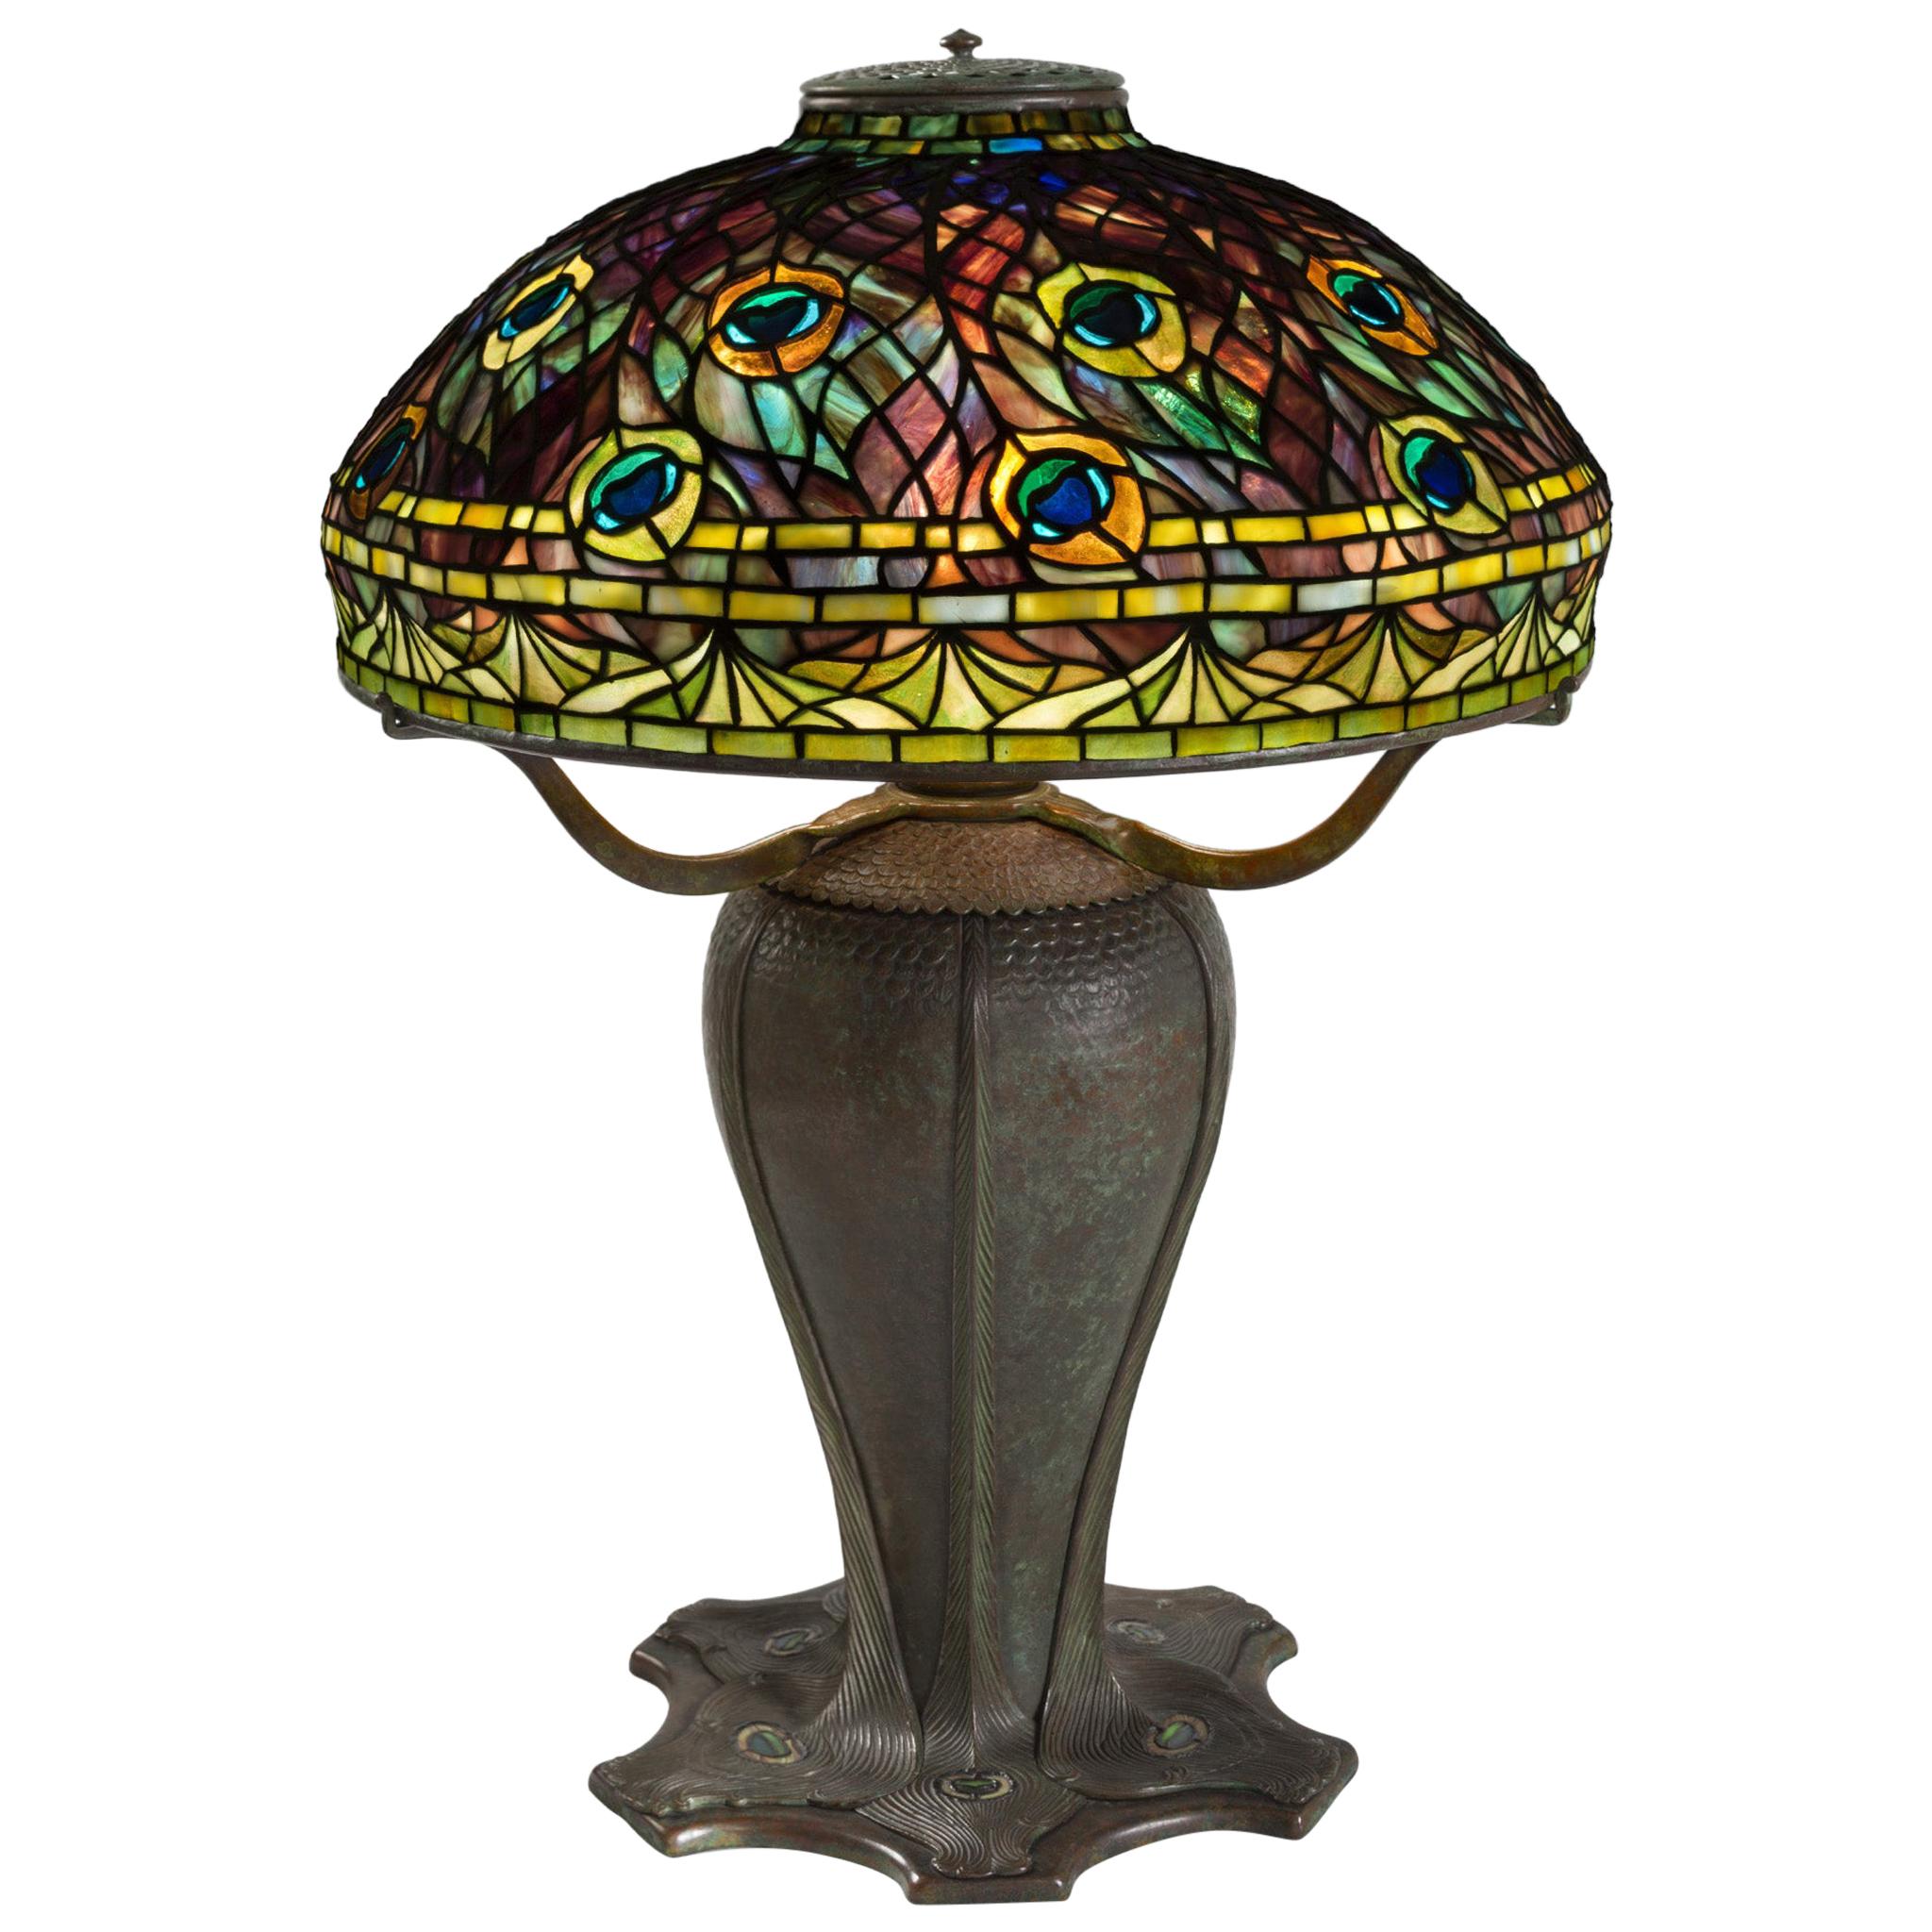 Tiffany Studios New York "Peacock" Table Lamp